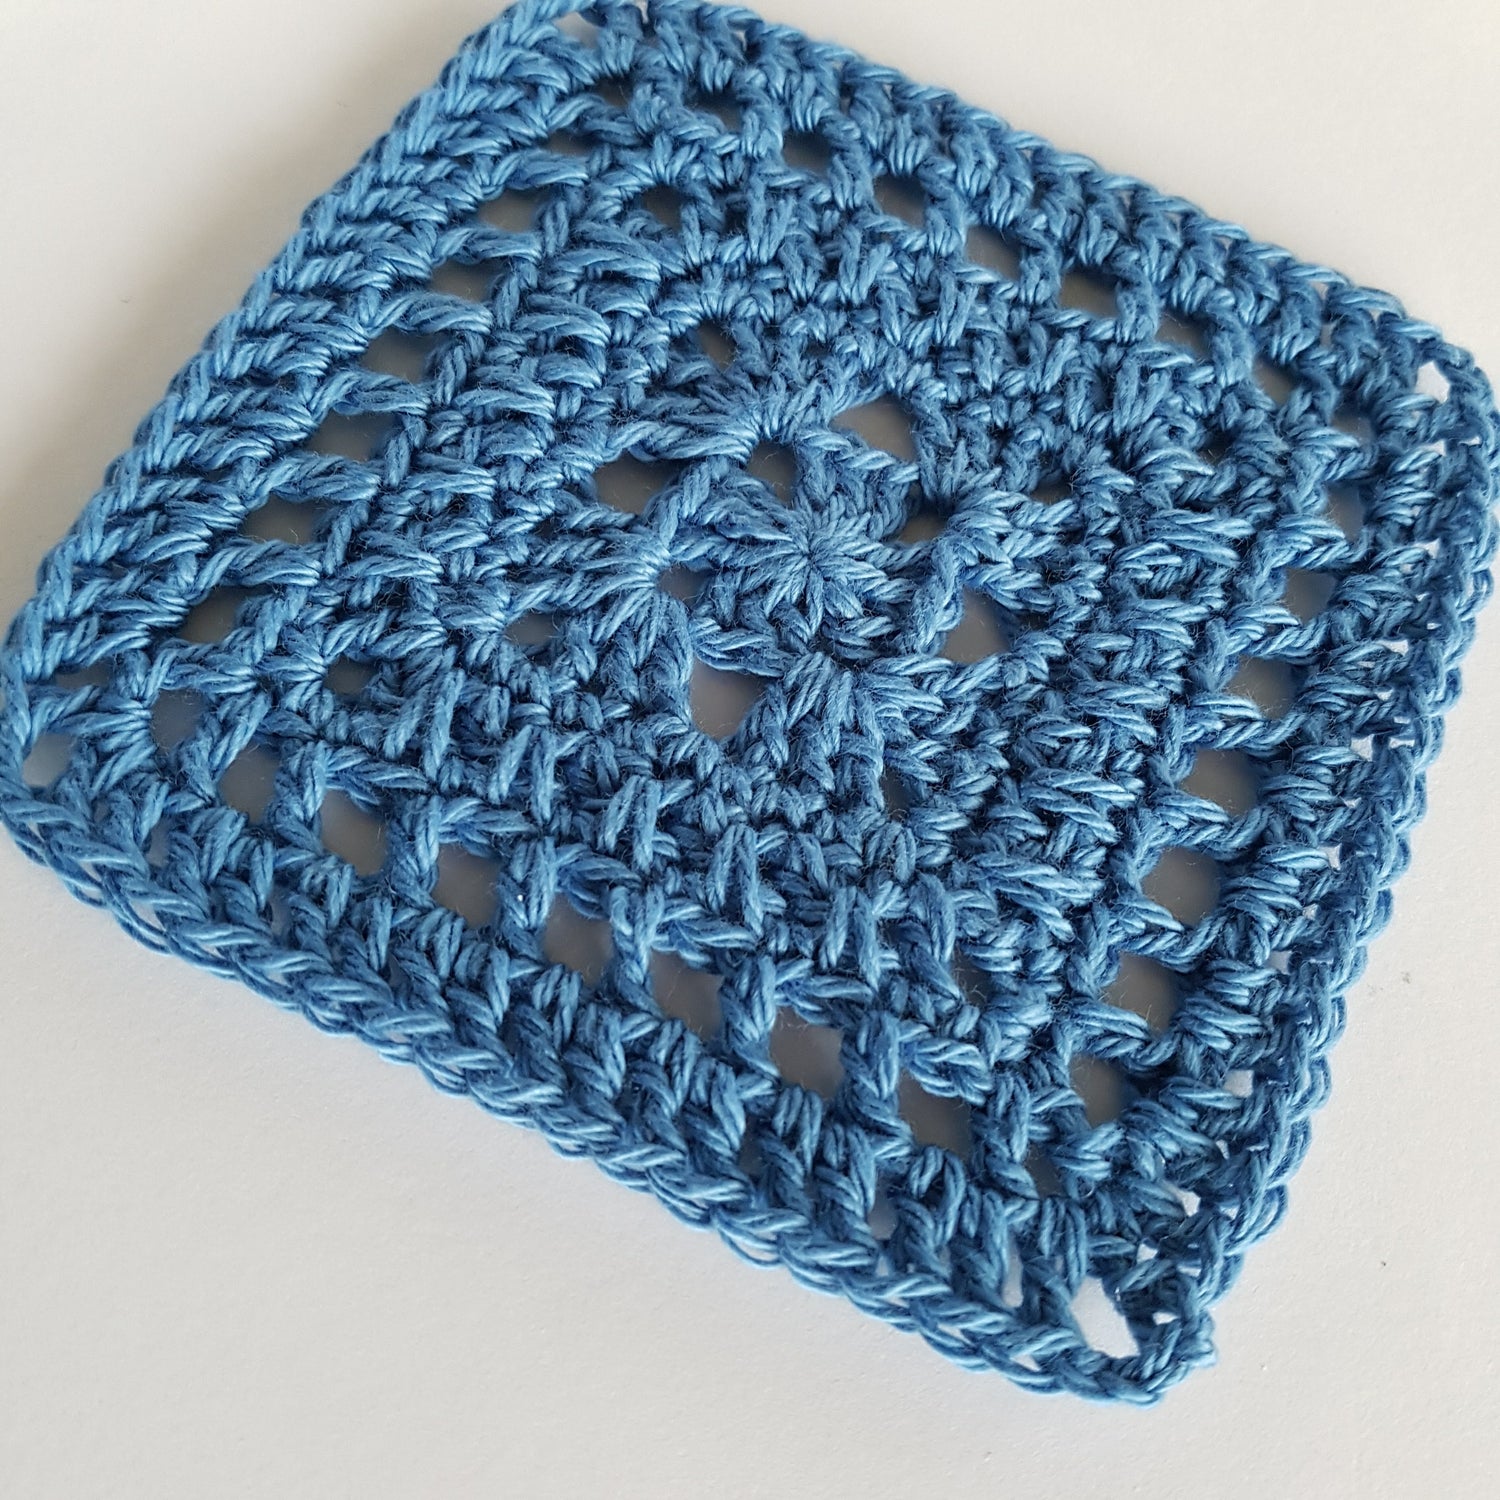 Cotton Picking Crochet Pattern by Shelley Husband in blue